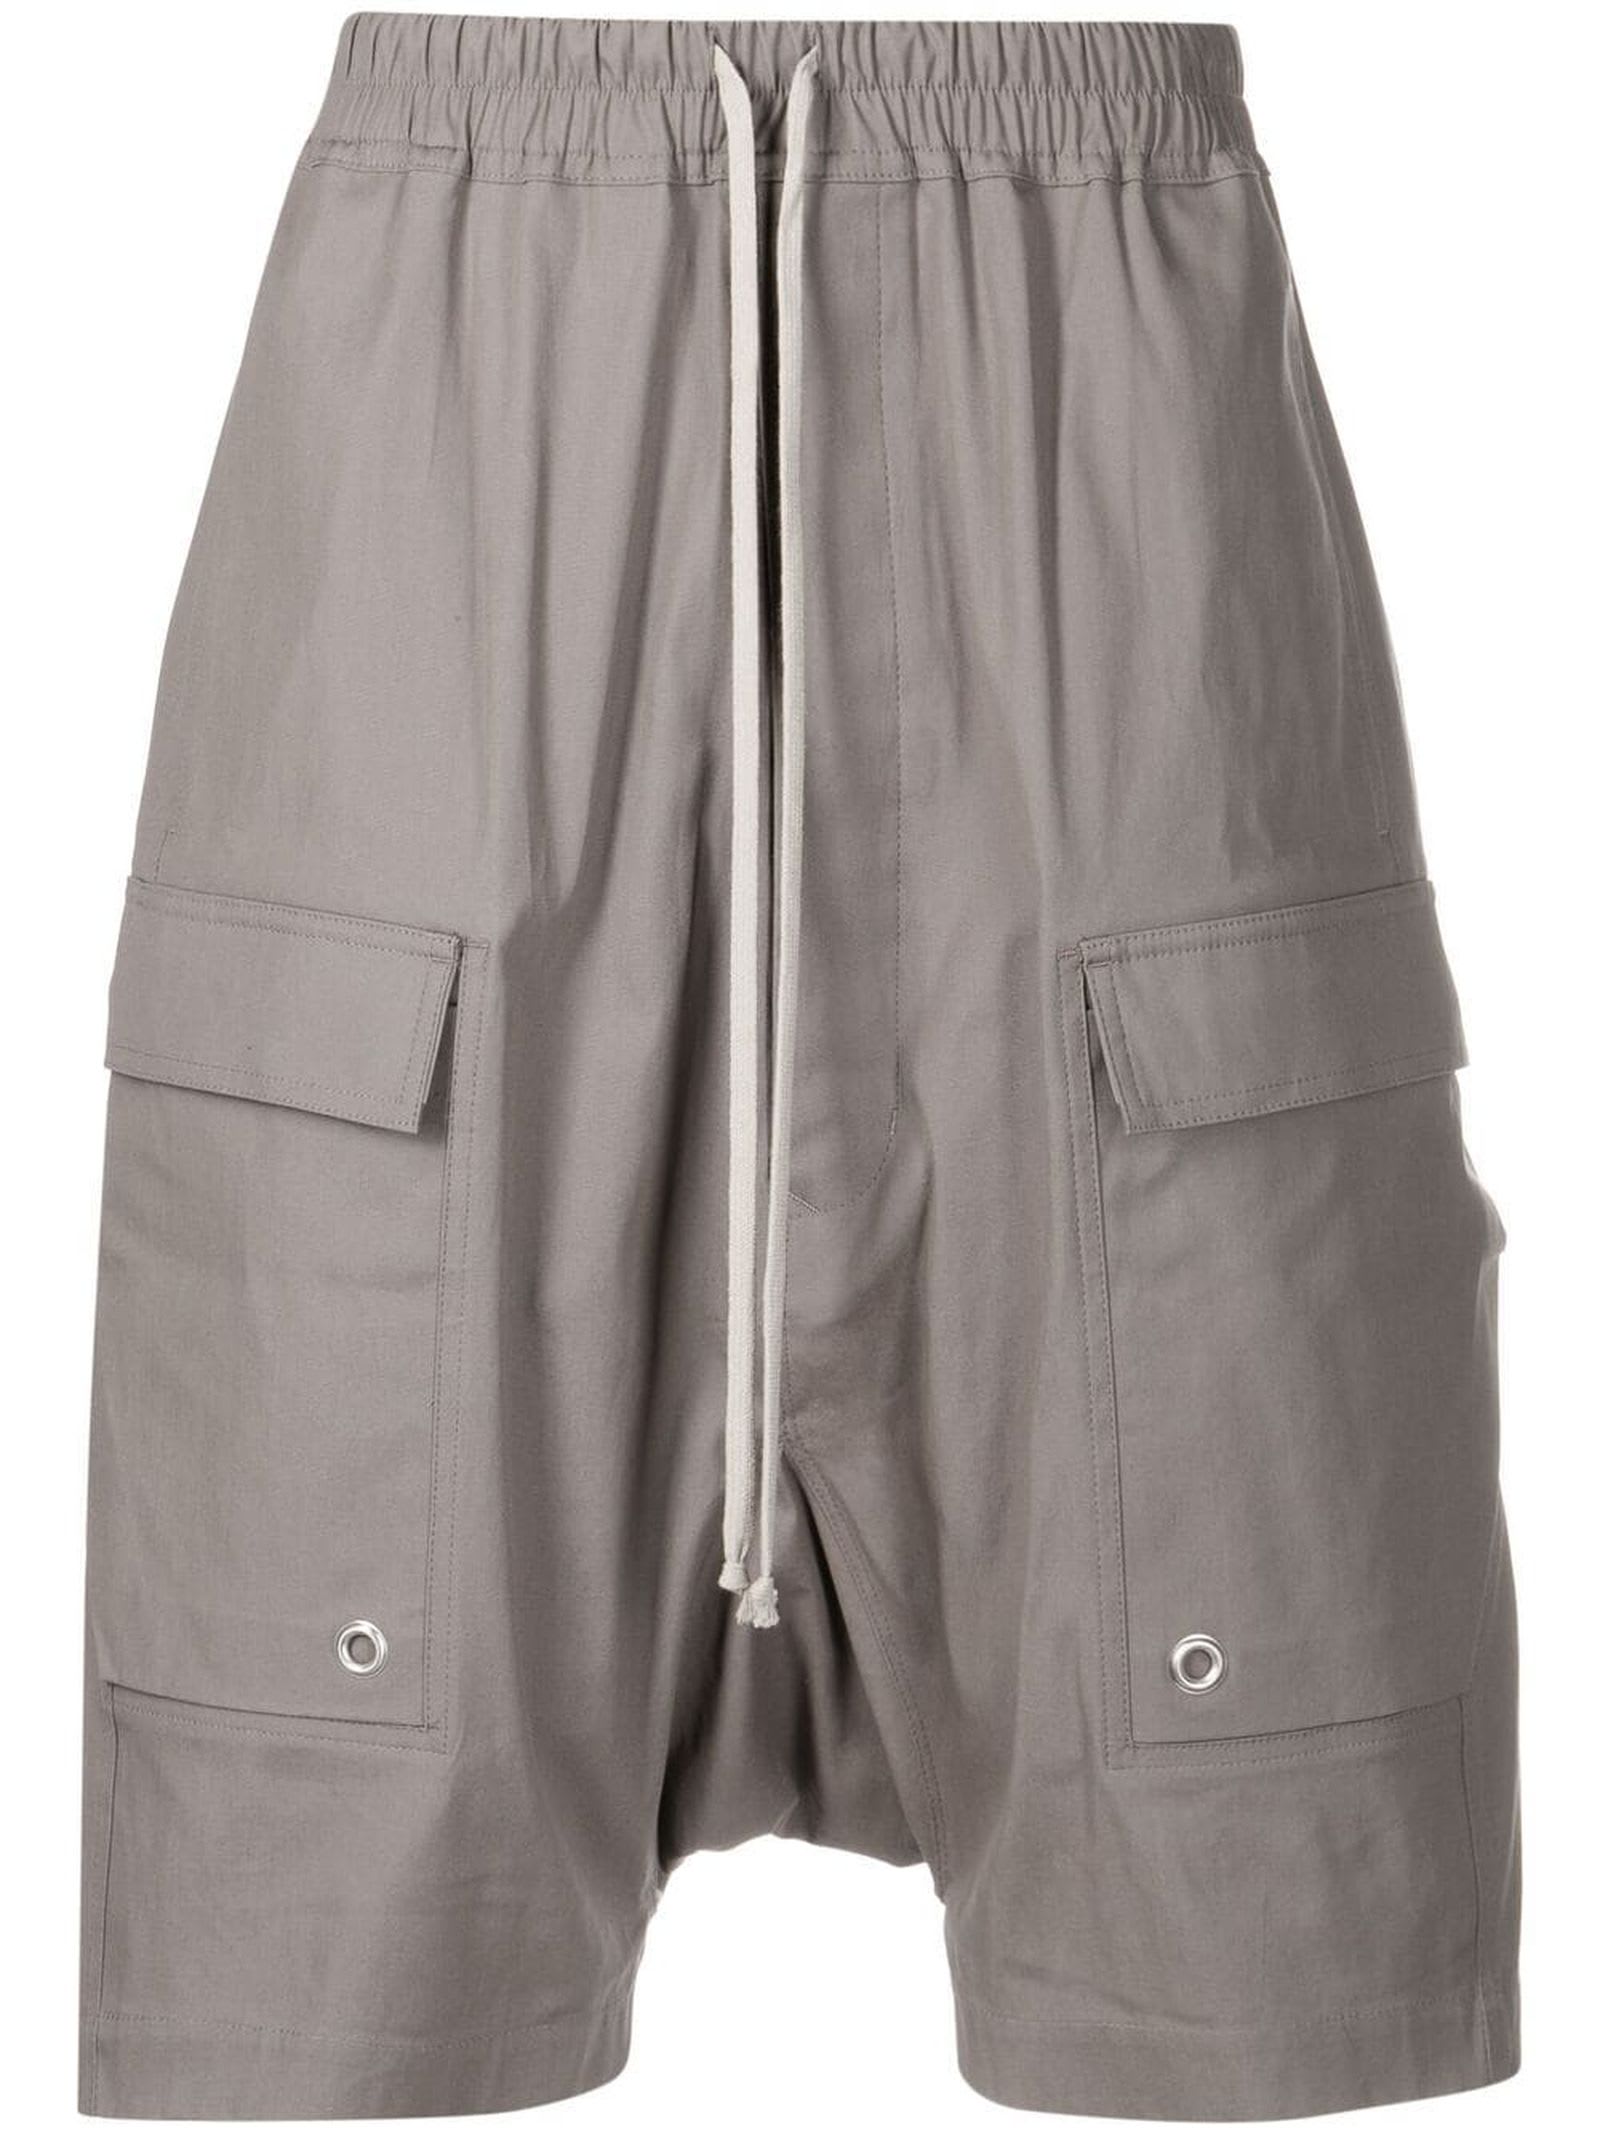 Rick Owens Grey Stretch Cotton Shorts